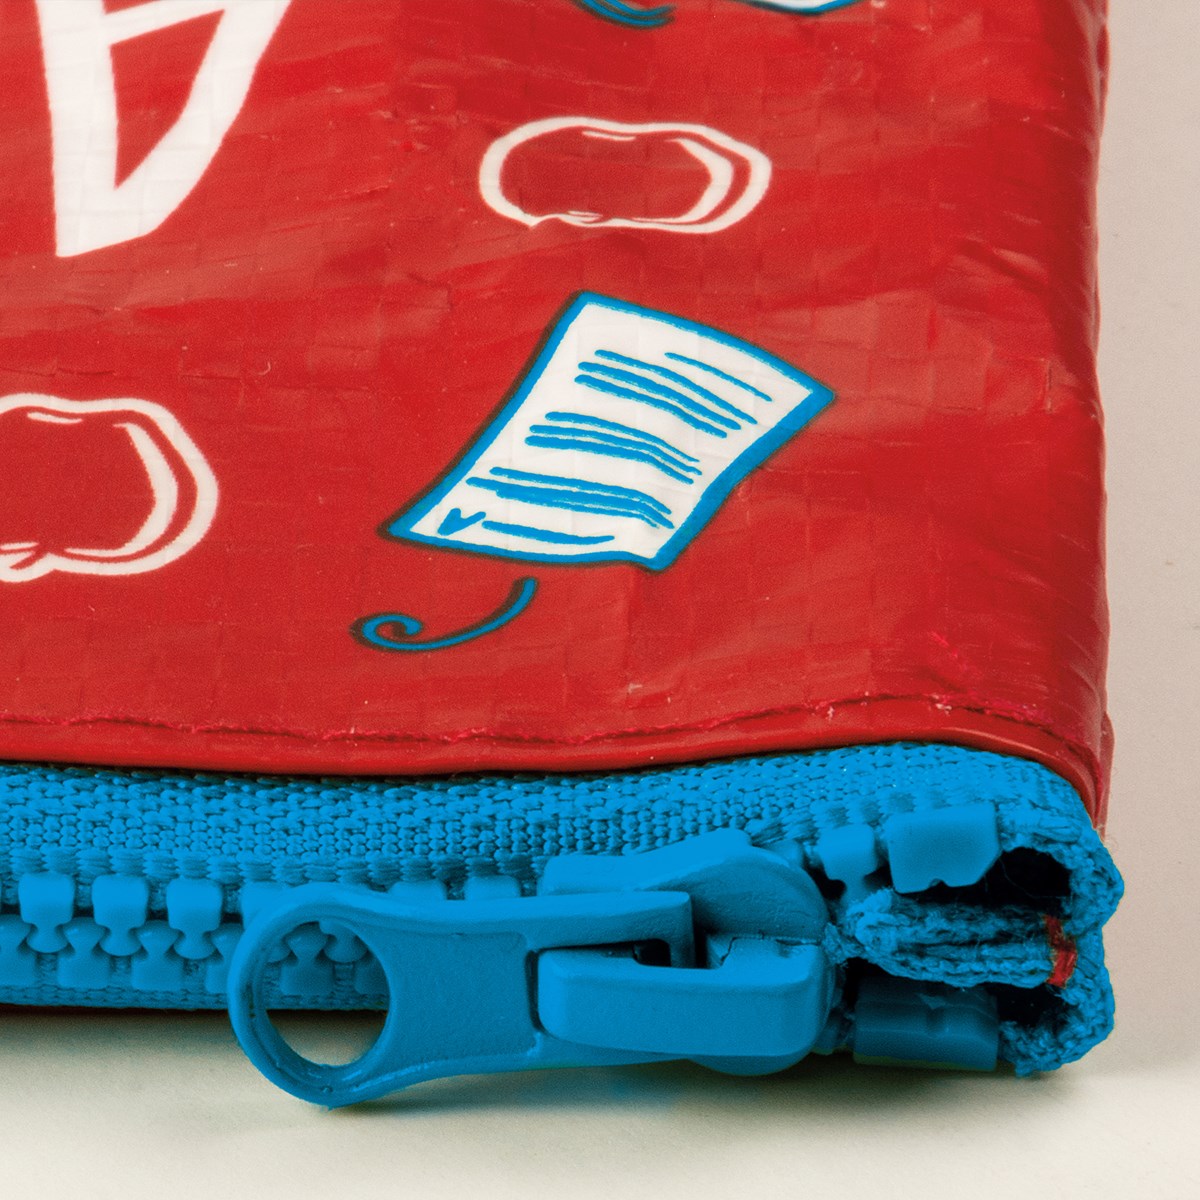 Awesome Teacher Zipper Wallet - Post-Consumer Material, Plastic, Metal